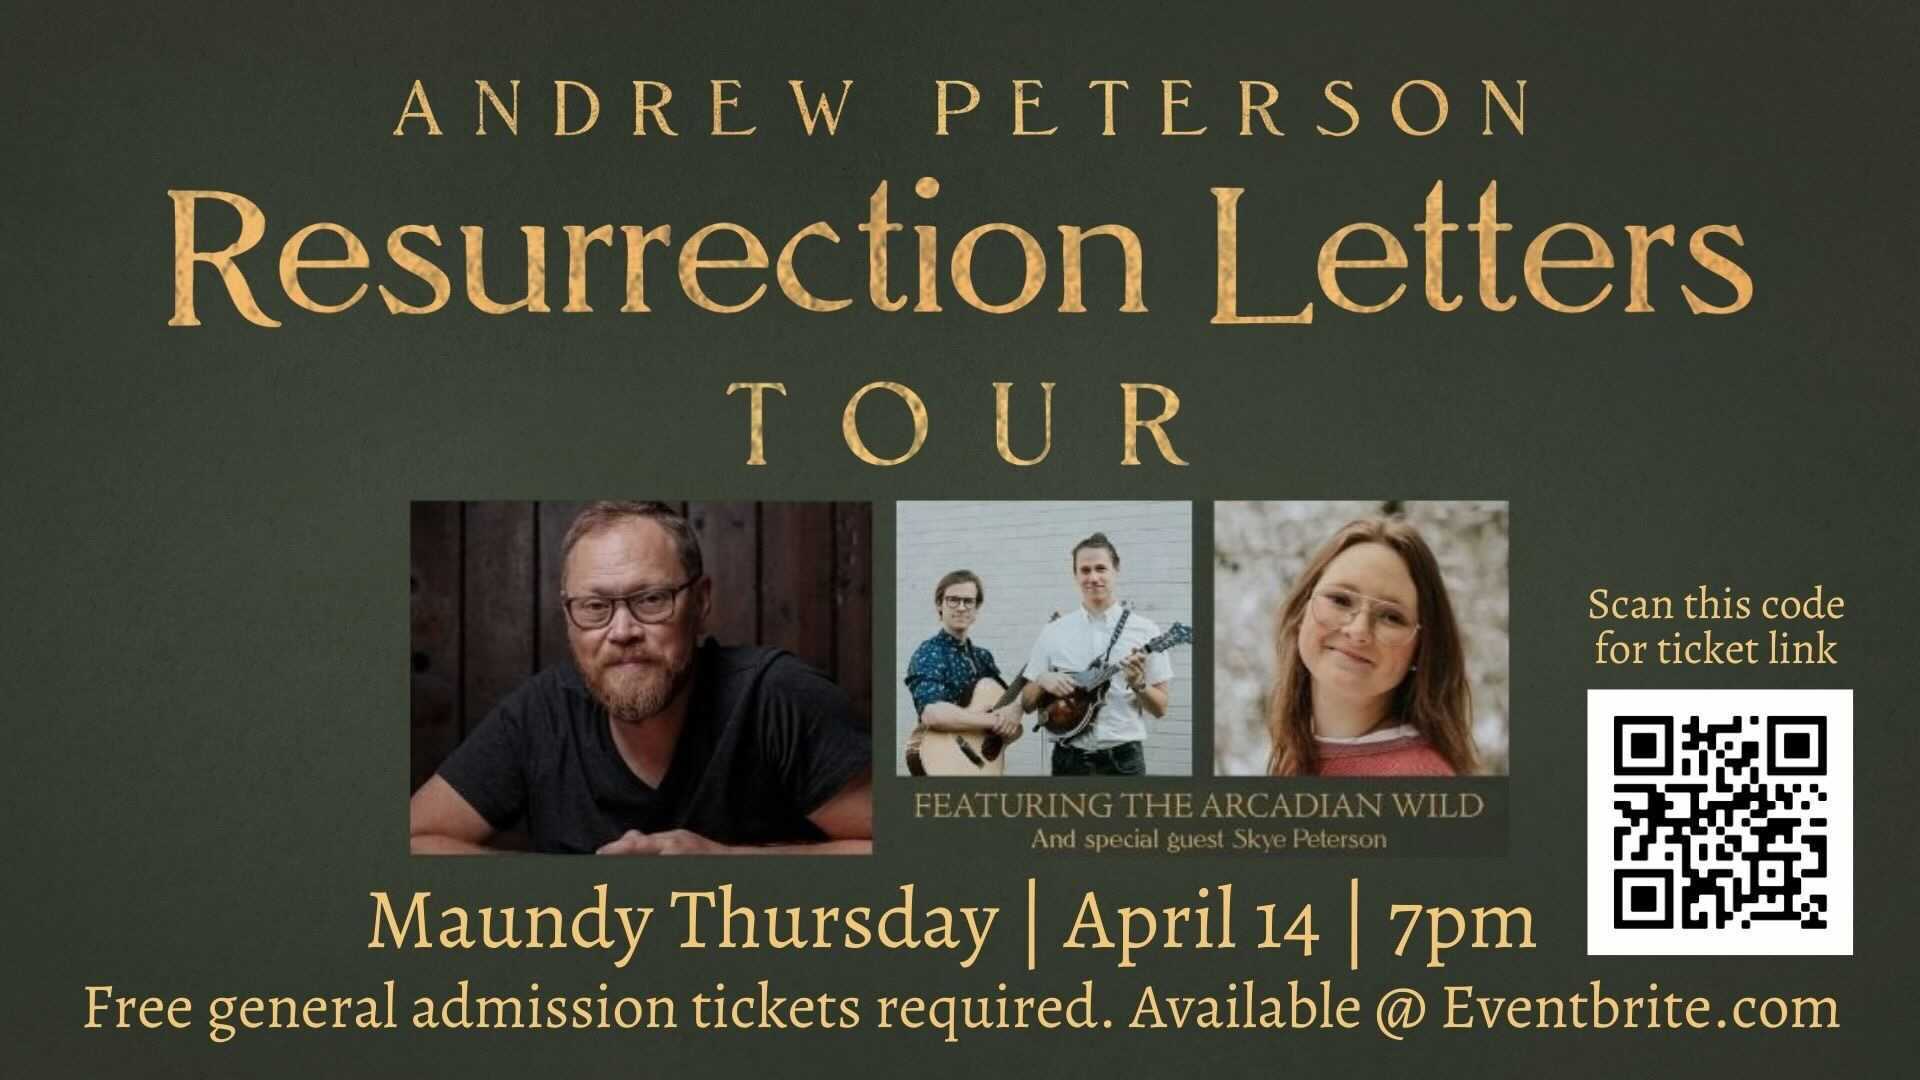 Andrew Peterson "Resurrection Letters" Tour Central Bearden